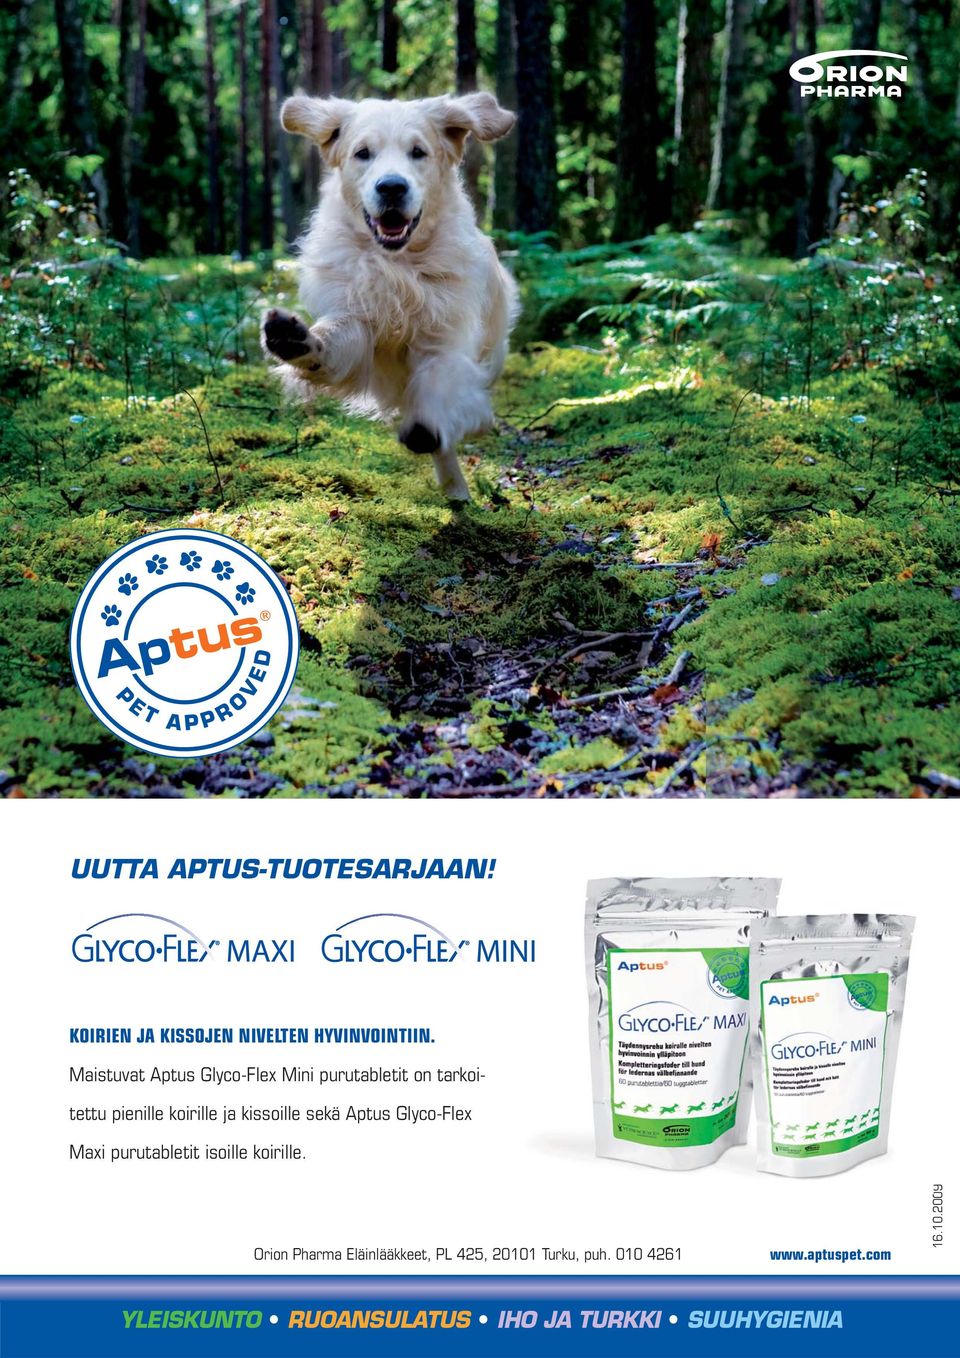 Glyco-Flex Maxi purutabletit isoille koirille. Orion Pharma Eläinlääkkeet, PL 425, 20101 Turku, puh.